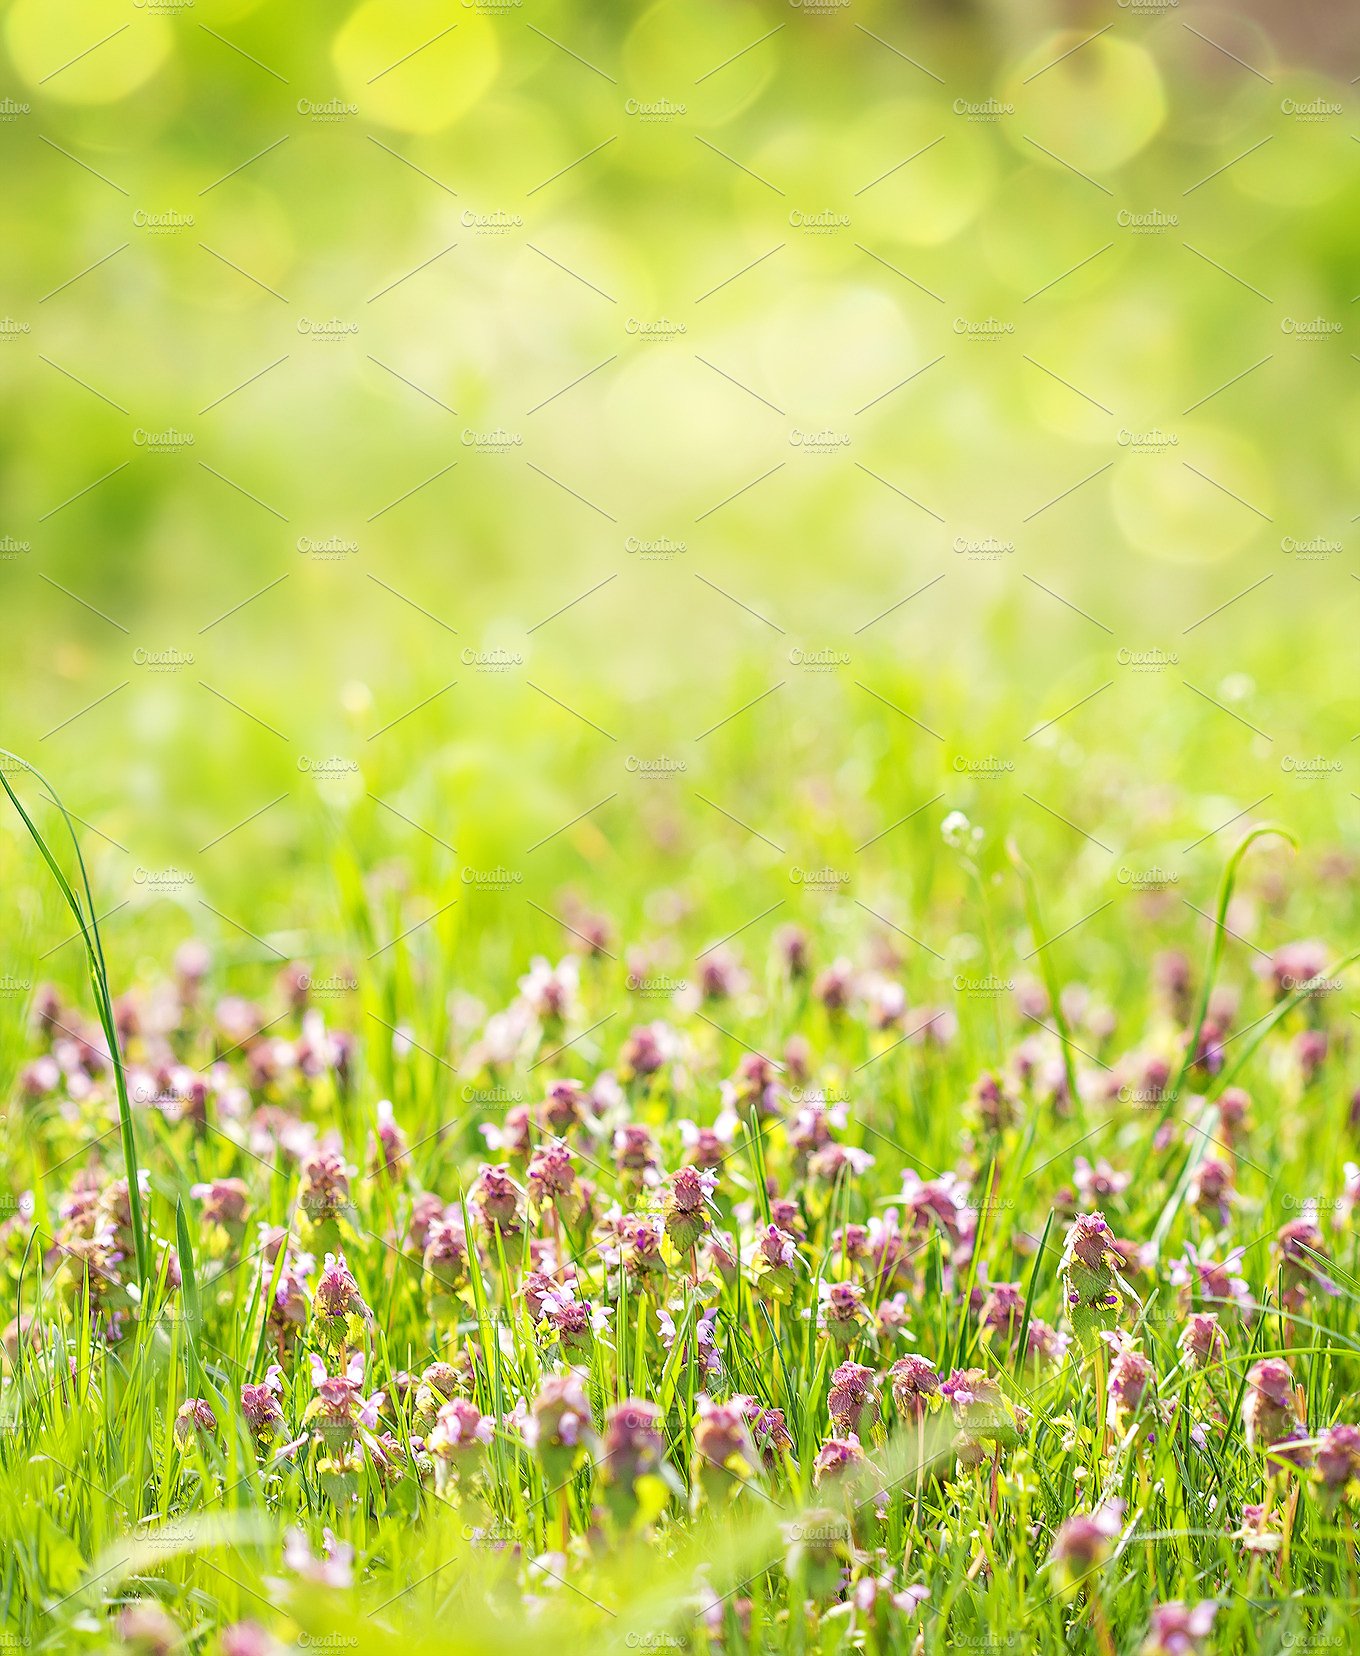 Sunny spring green grass and pink fl ~ Nature Photos ~ Creative Market